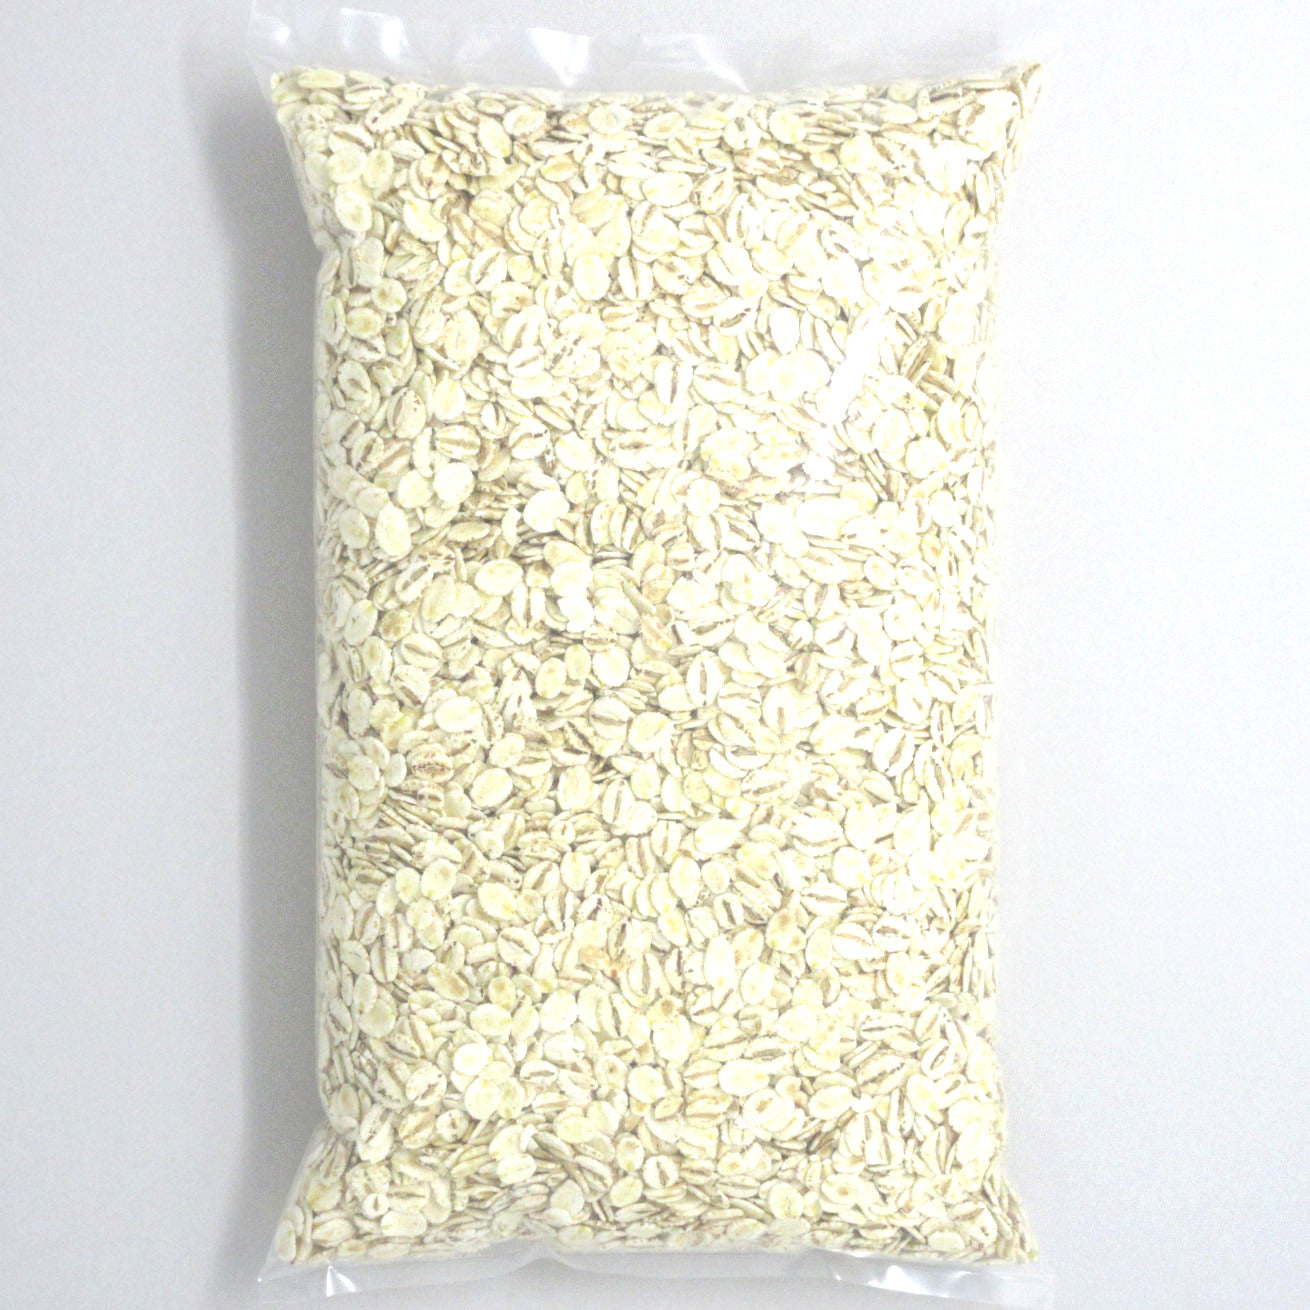 Flour Barrel product image - Barley Flakes